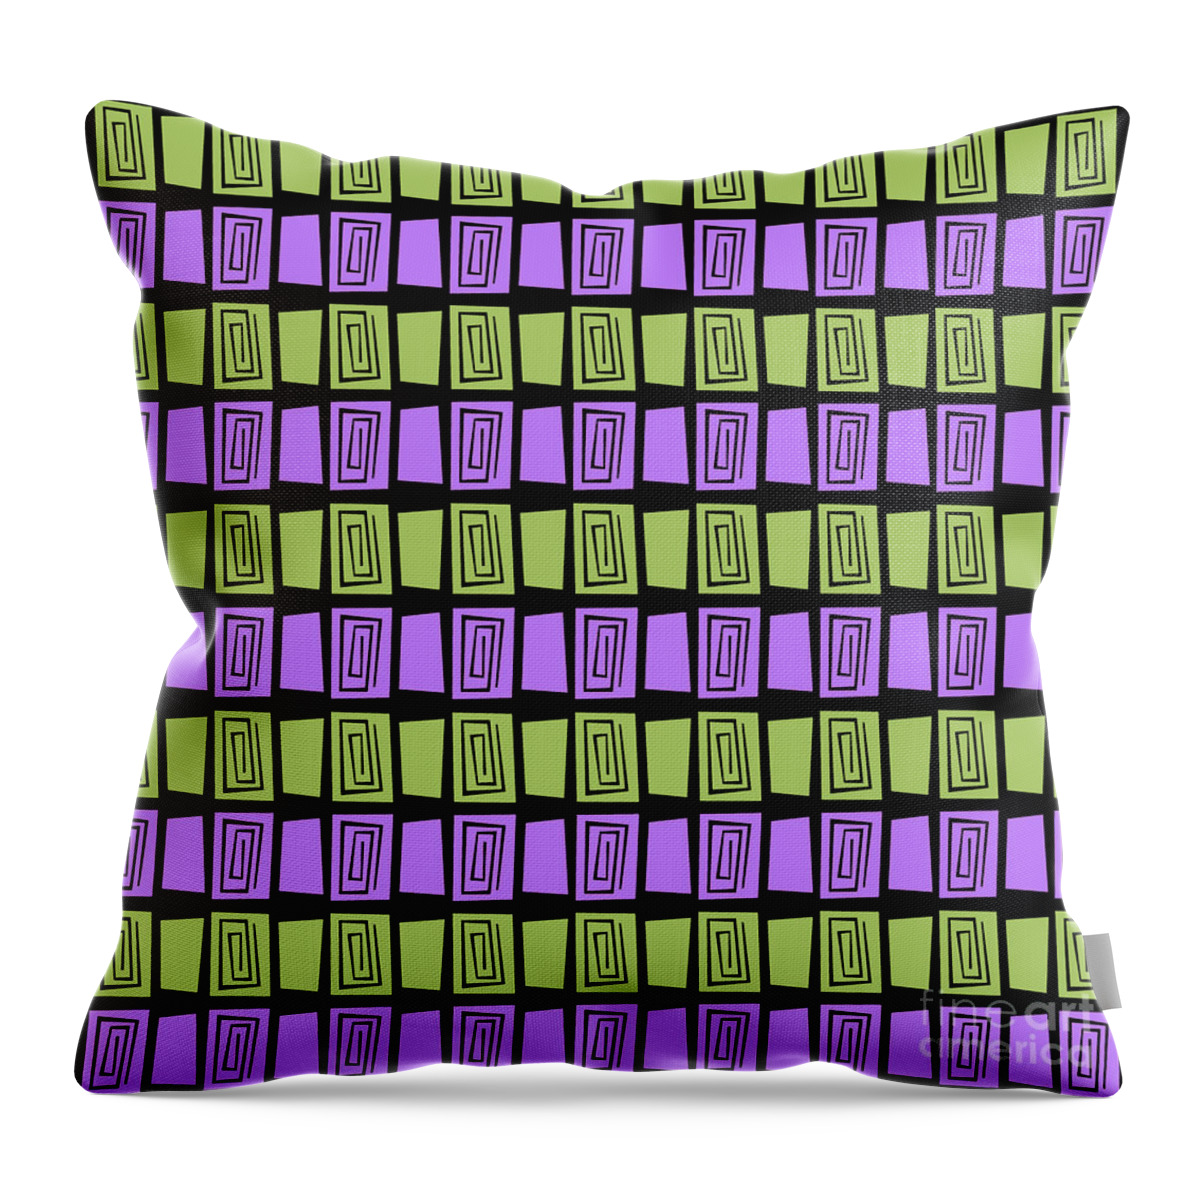 Mid Century Modern Throw Pillow featuring the digital art Mid Century Modern Maze #1 by Donna Mibus